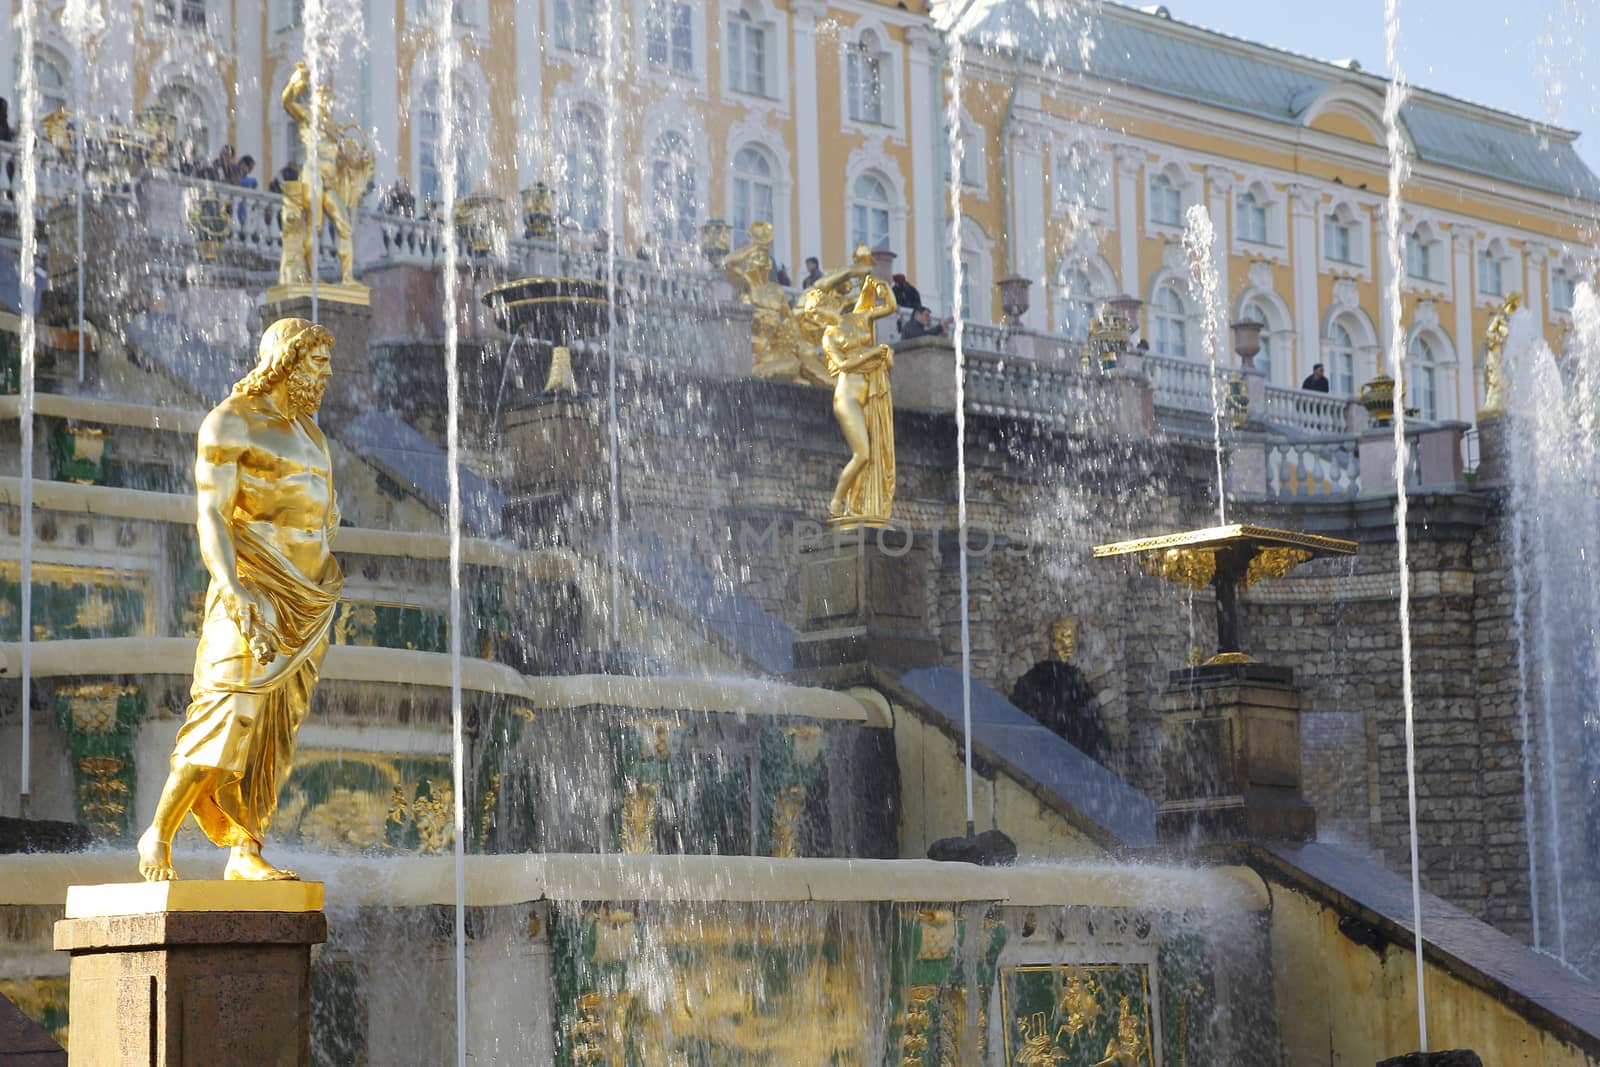 Grand Cascade Fountains At Peterhof Palace, St. Petersburg. by pumppump